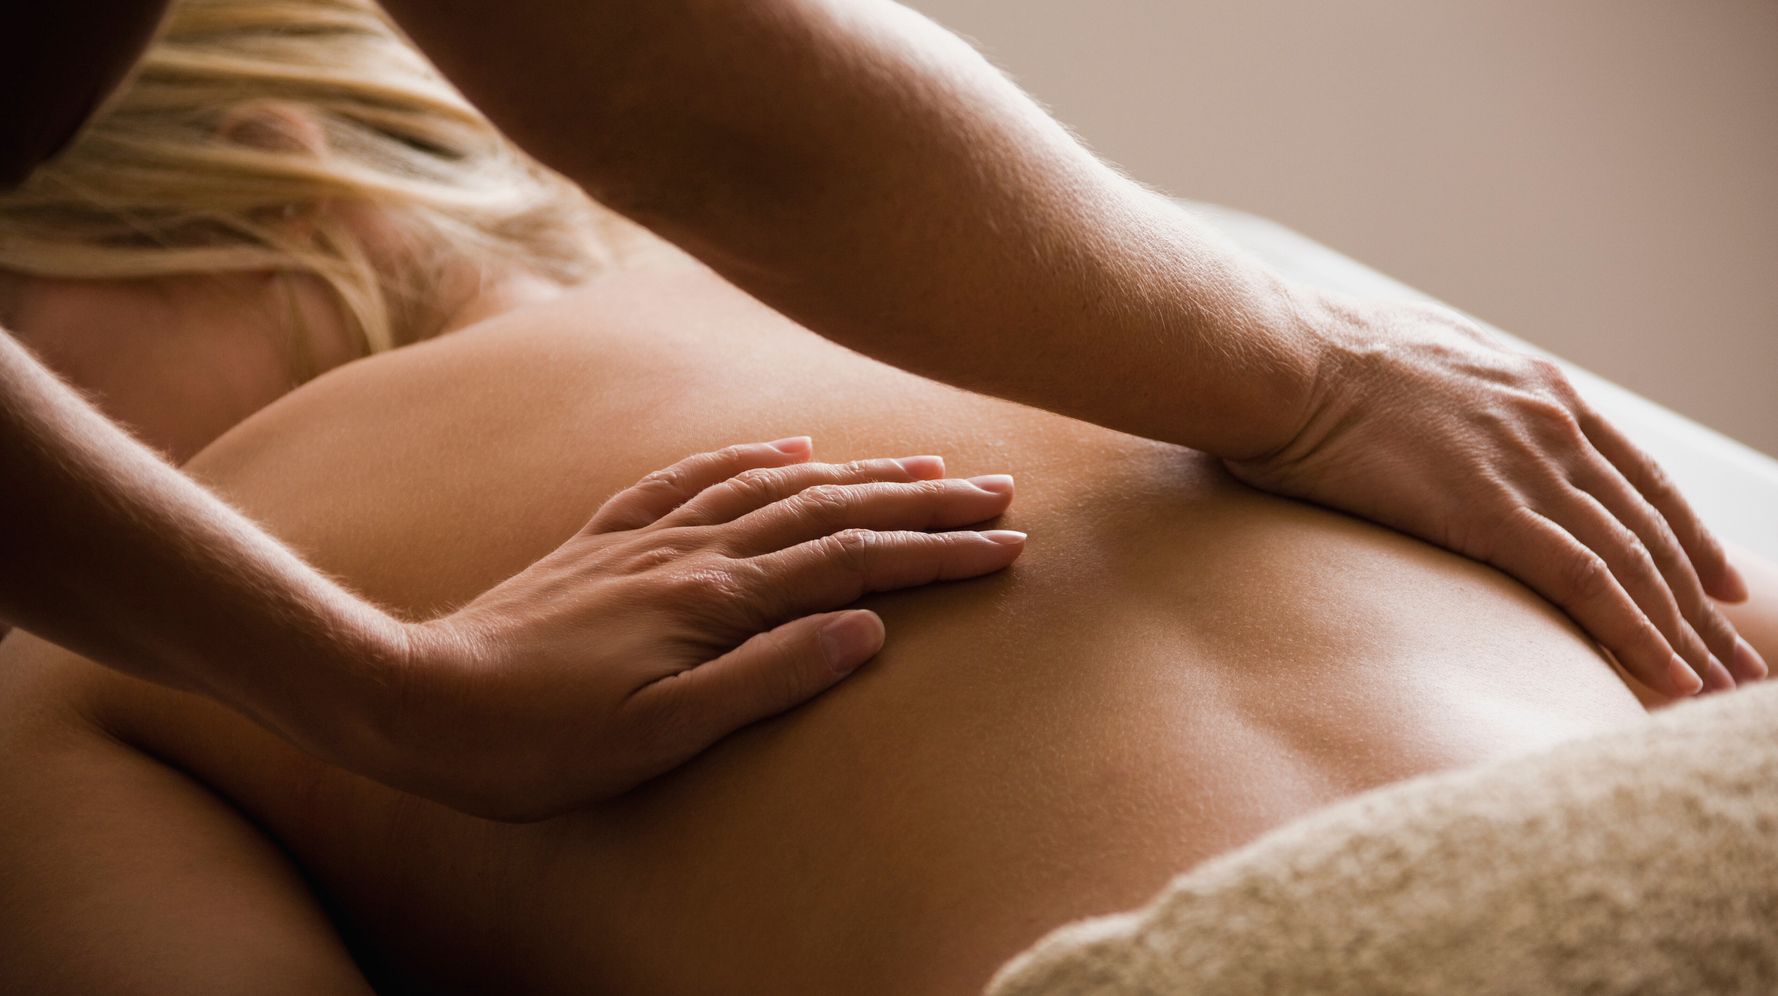 Massage Gun Treatment. Physical Therapist Massaging Man's Lower